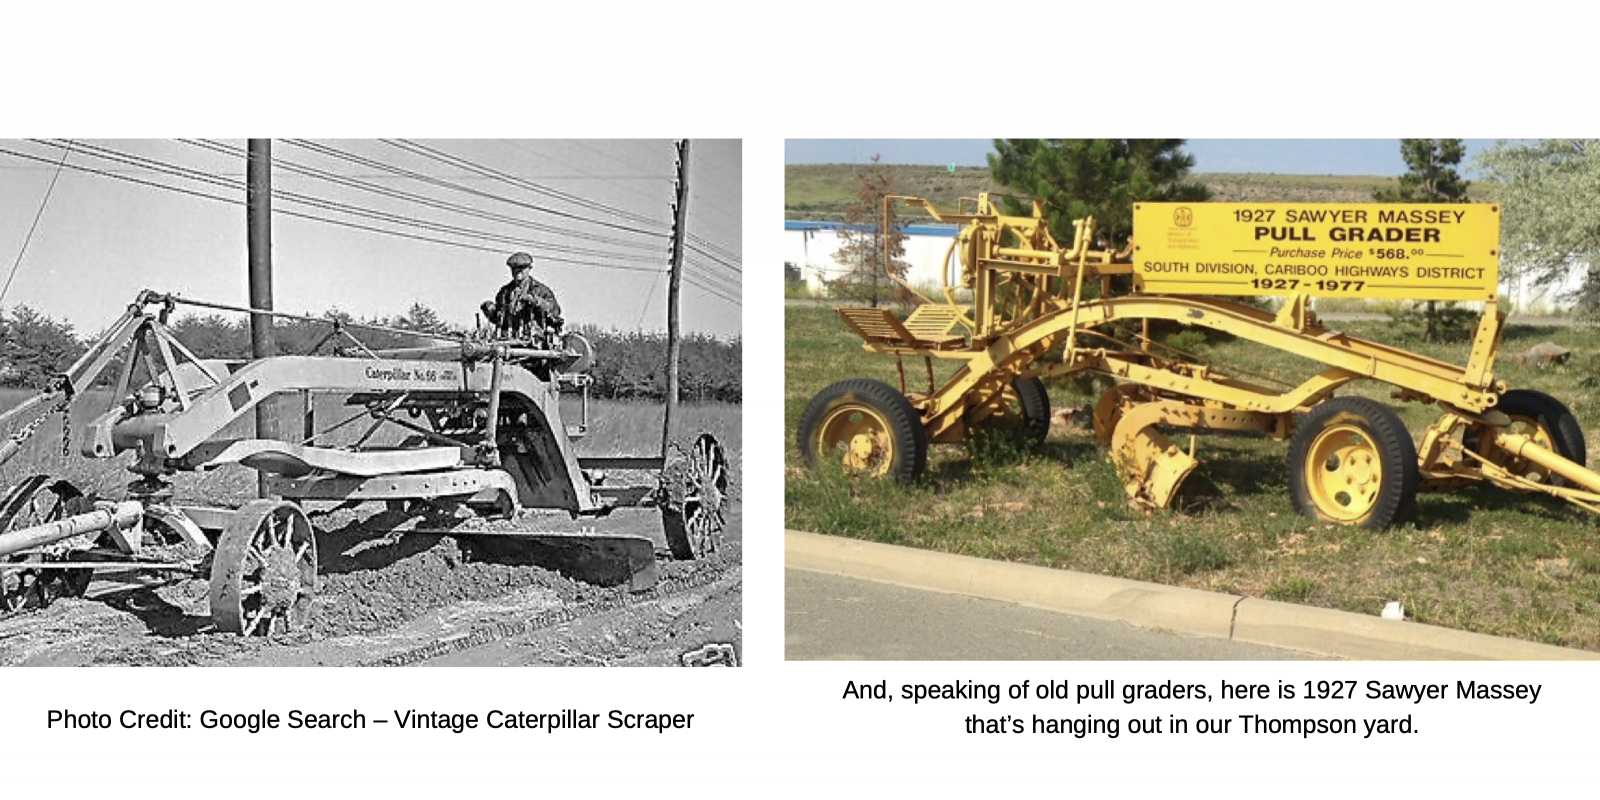 Image One - Photo Credit - Google Search - Vintage Caterpillar Scraper, Image 2 - A 1927 Sawyer Massey Pull Grader